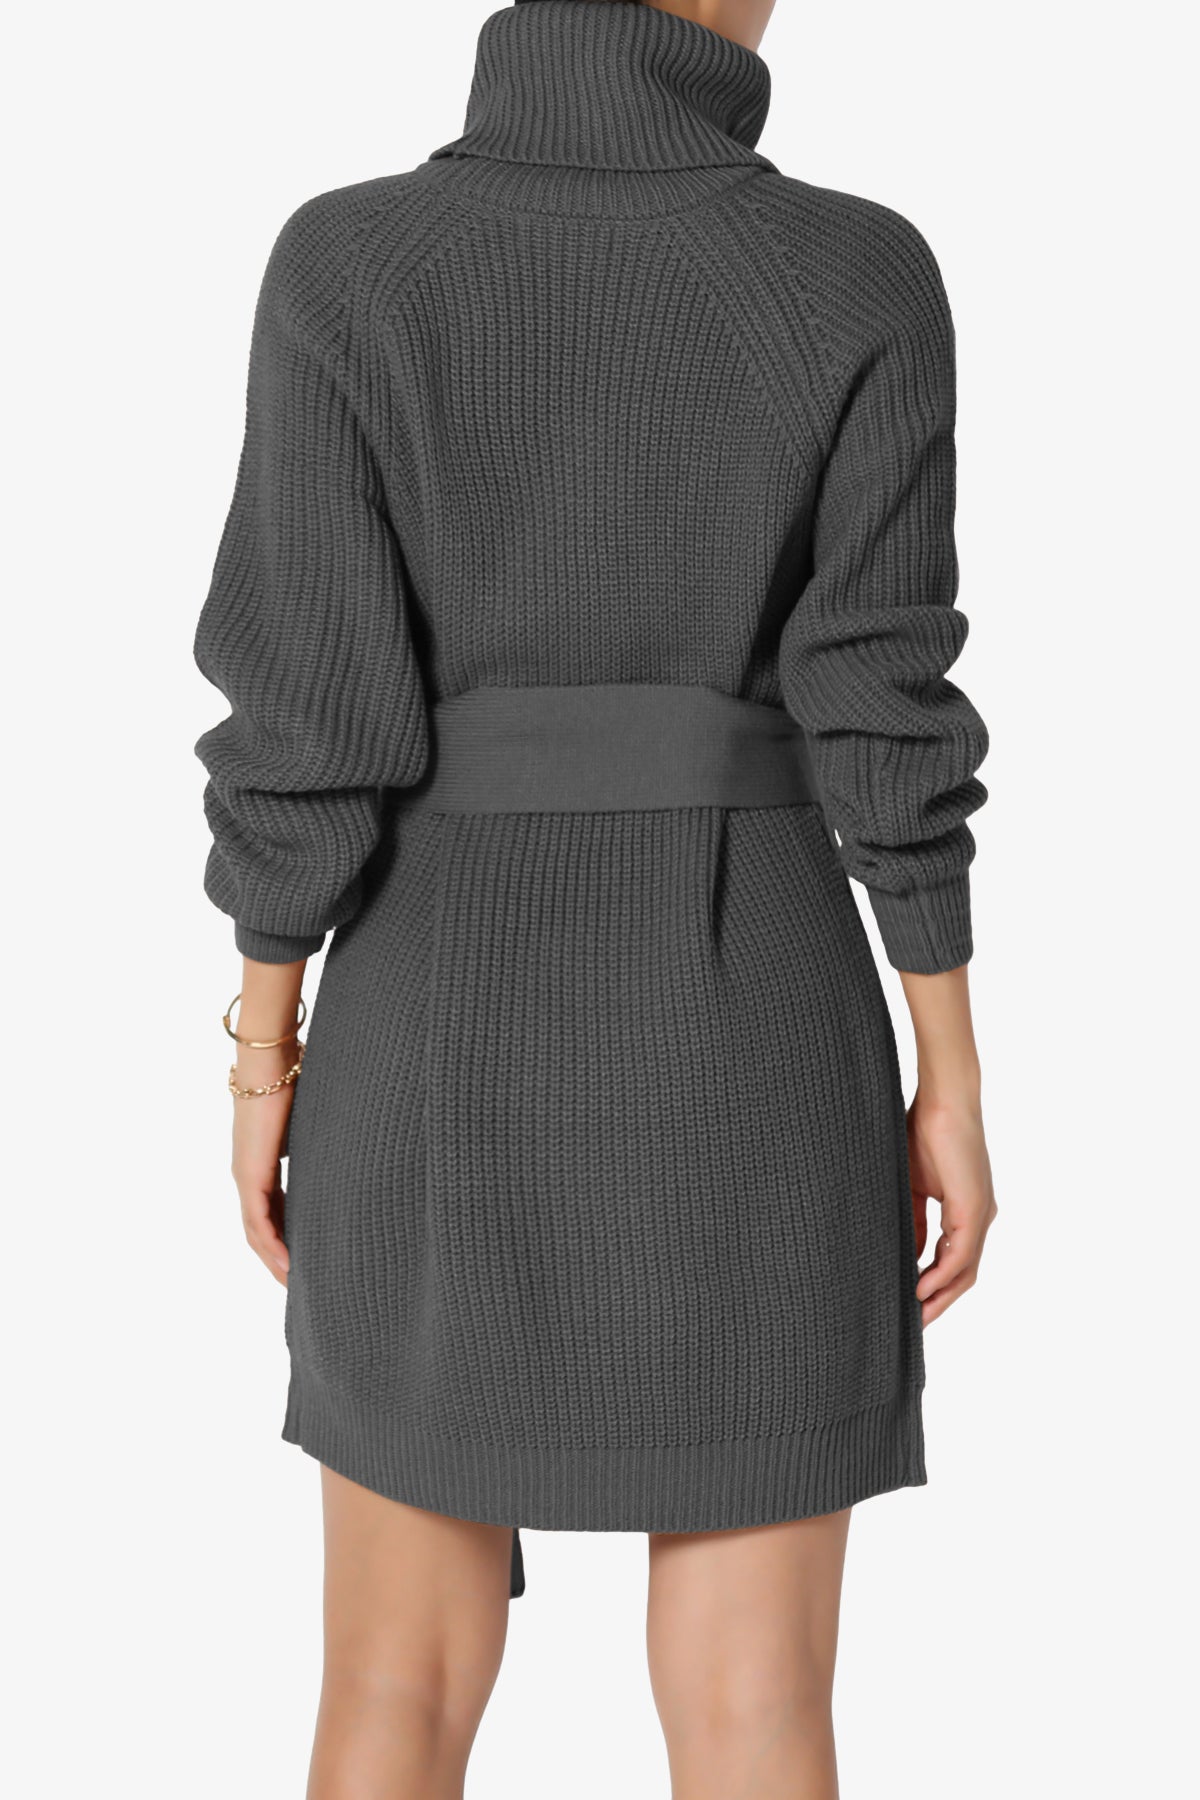 Arkin Turtle Neck Pullover Sweater Mini Dress ASH GREY_2